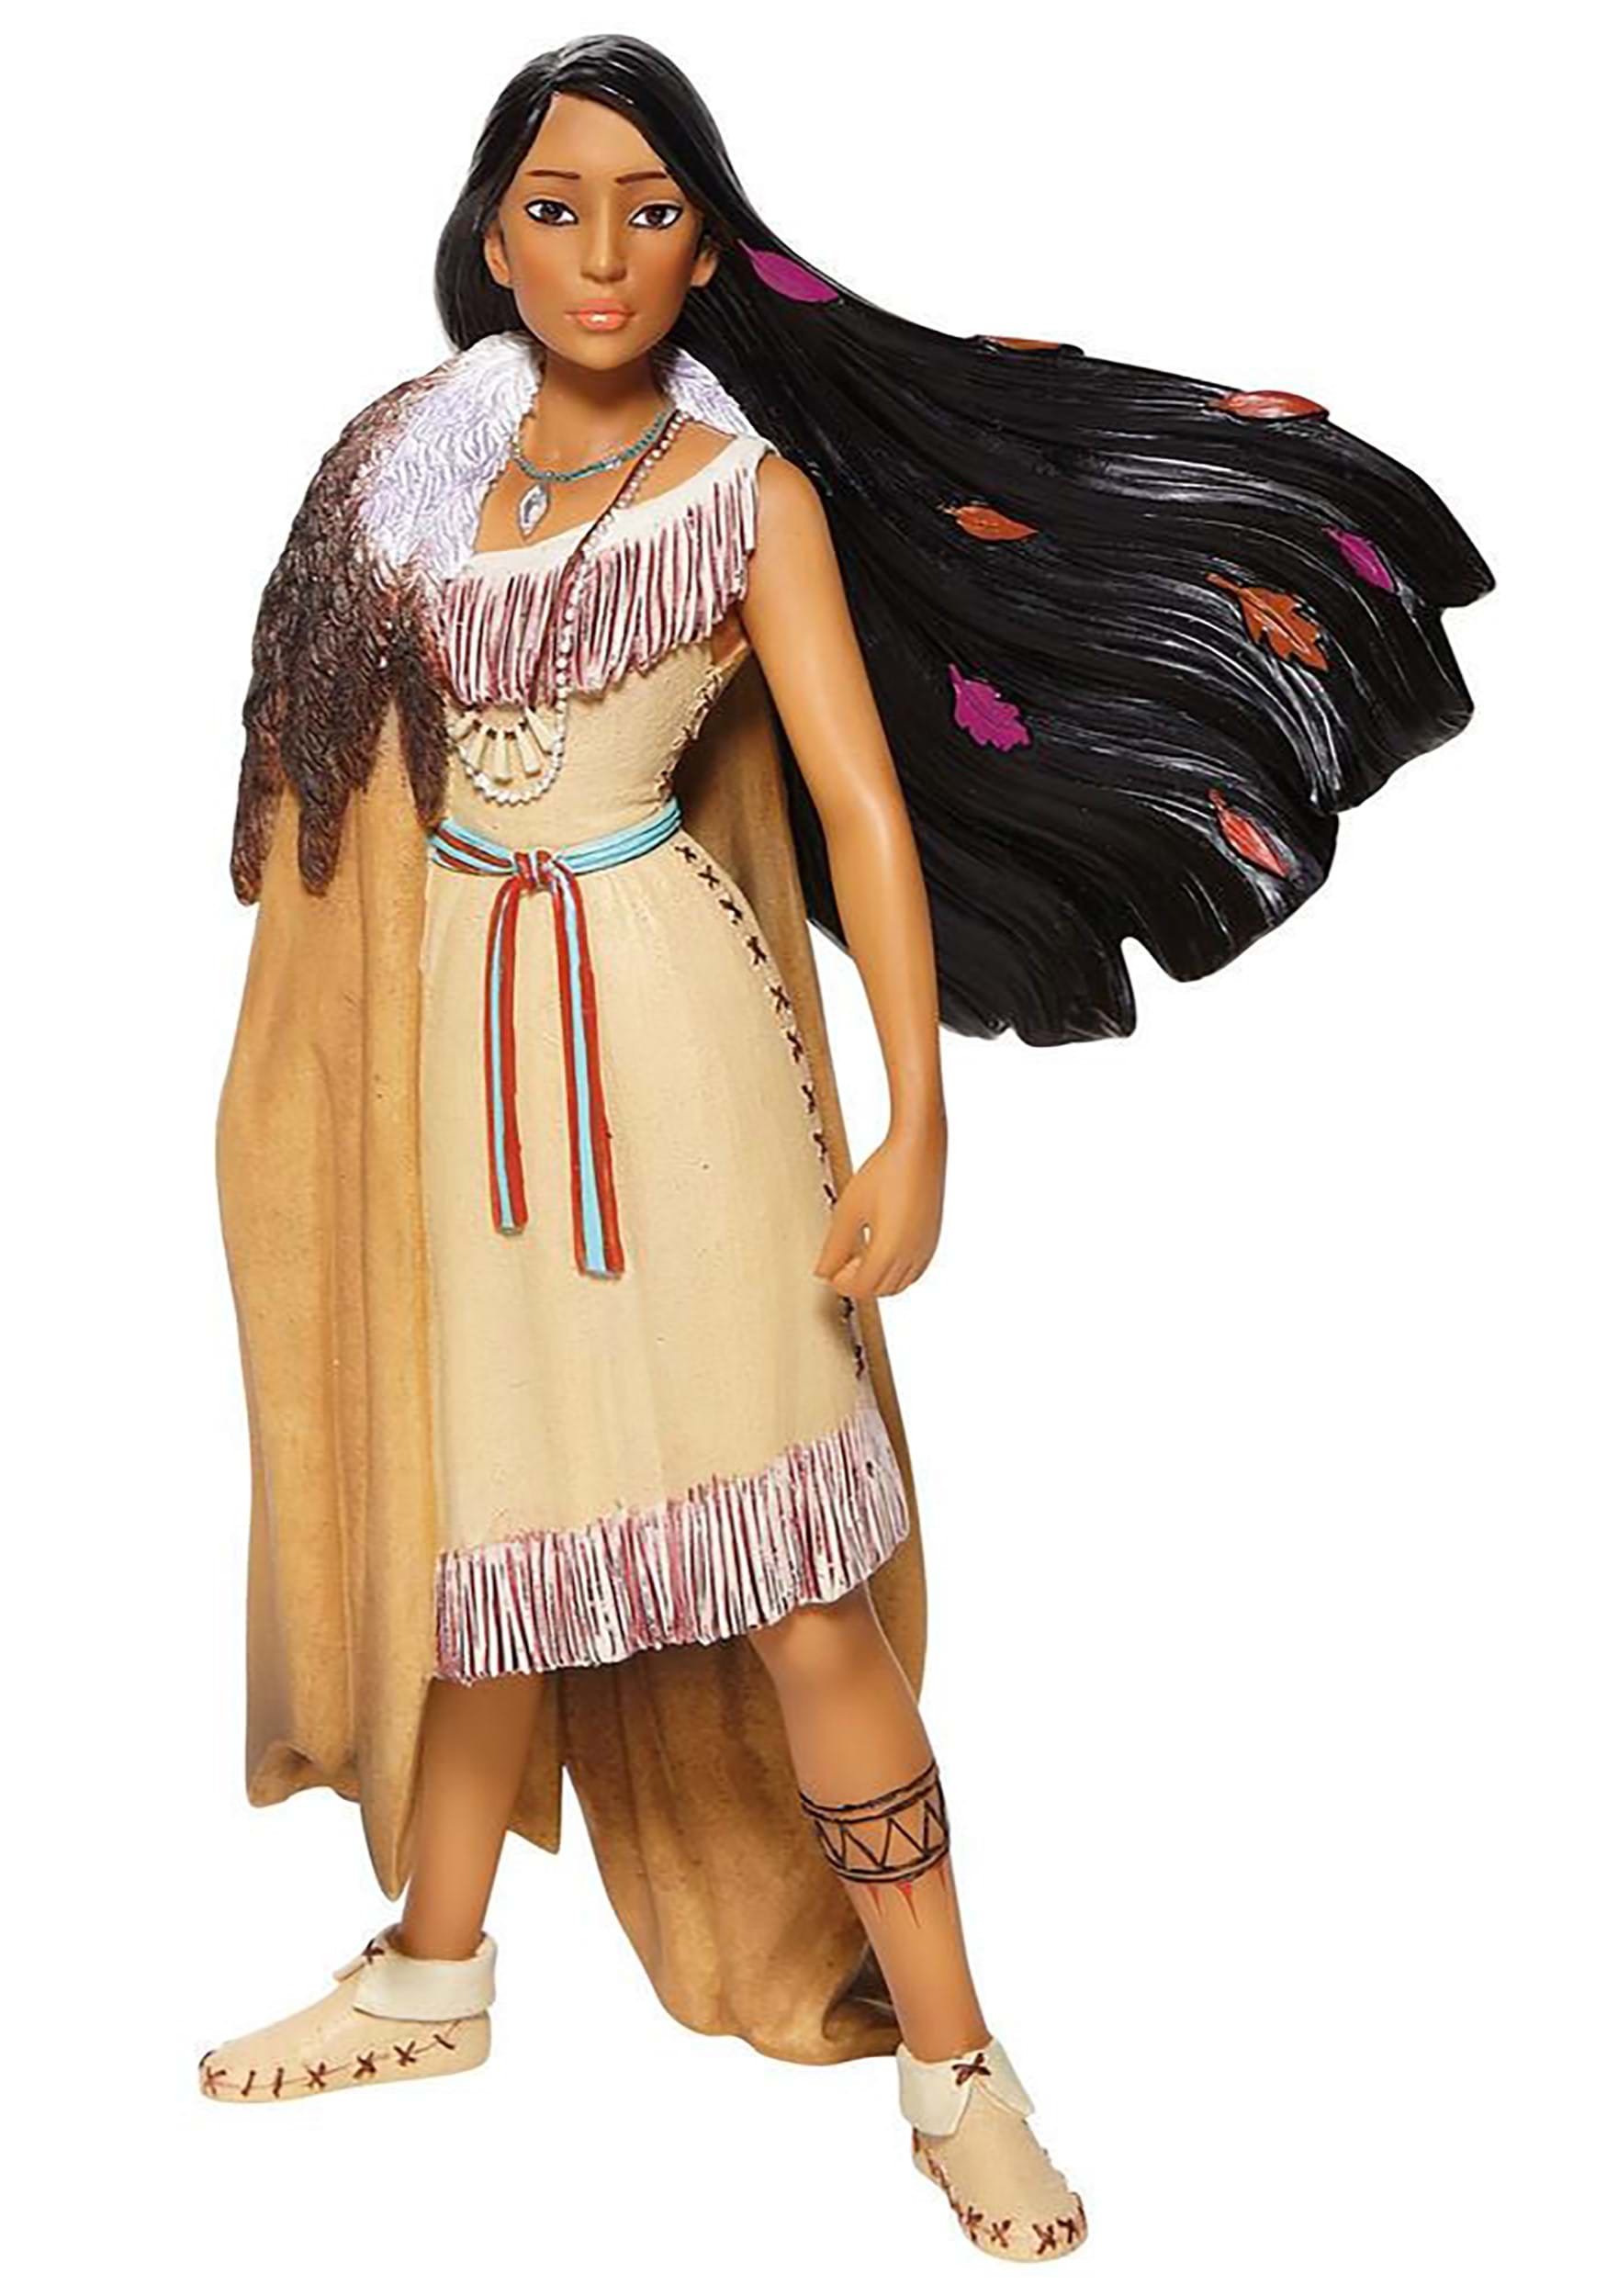 Couture De Force Statue of Pocahontas